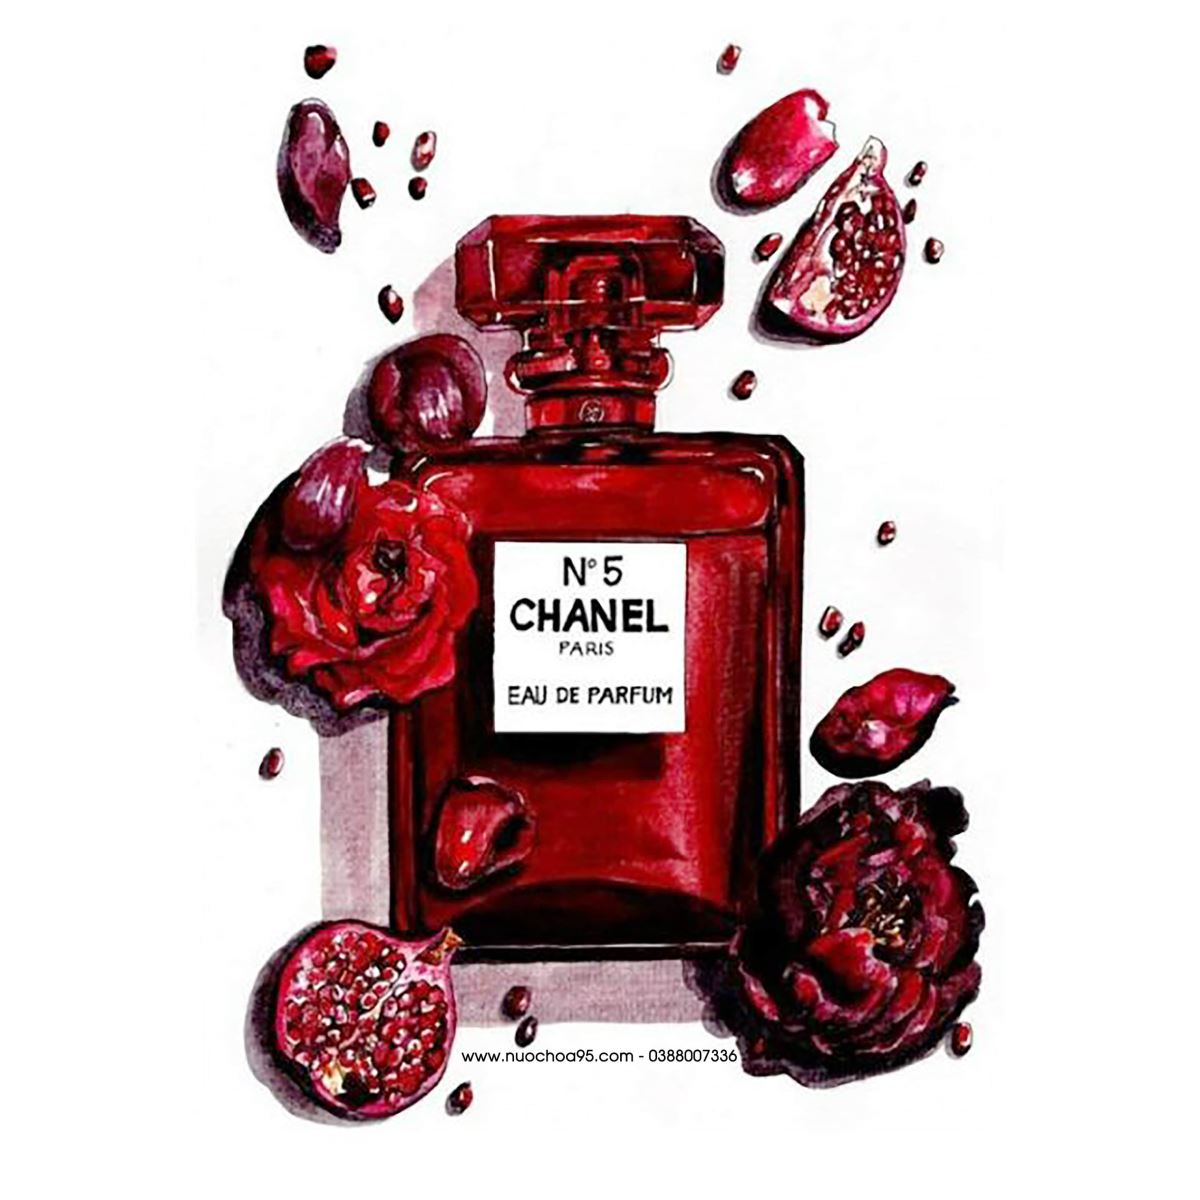 Chanel No 5 Eau de Parfum Red Bottle  My Women Stuff